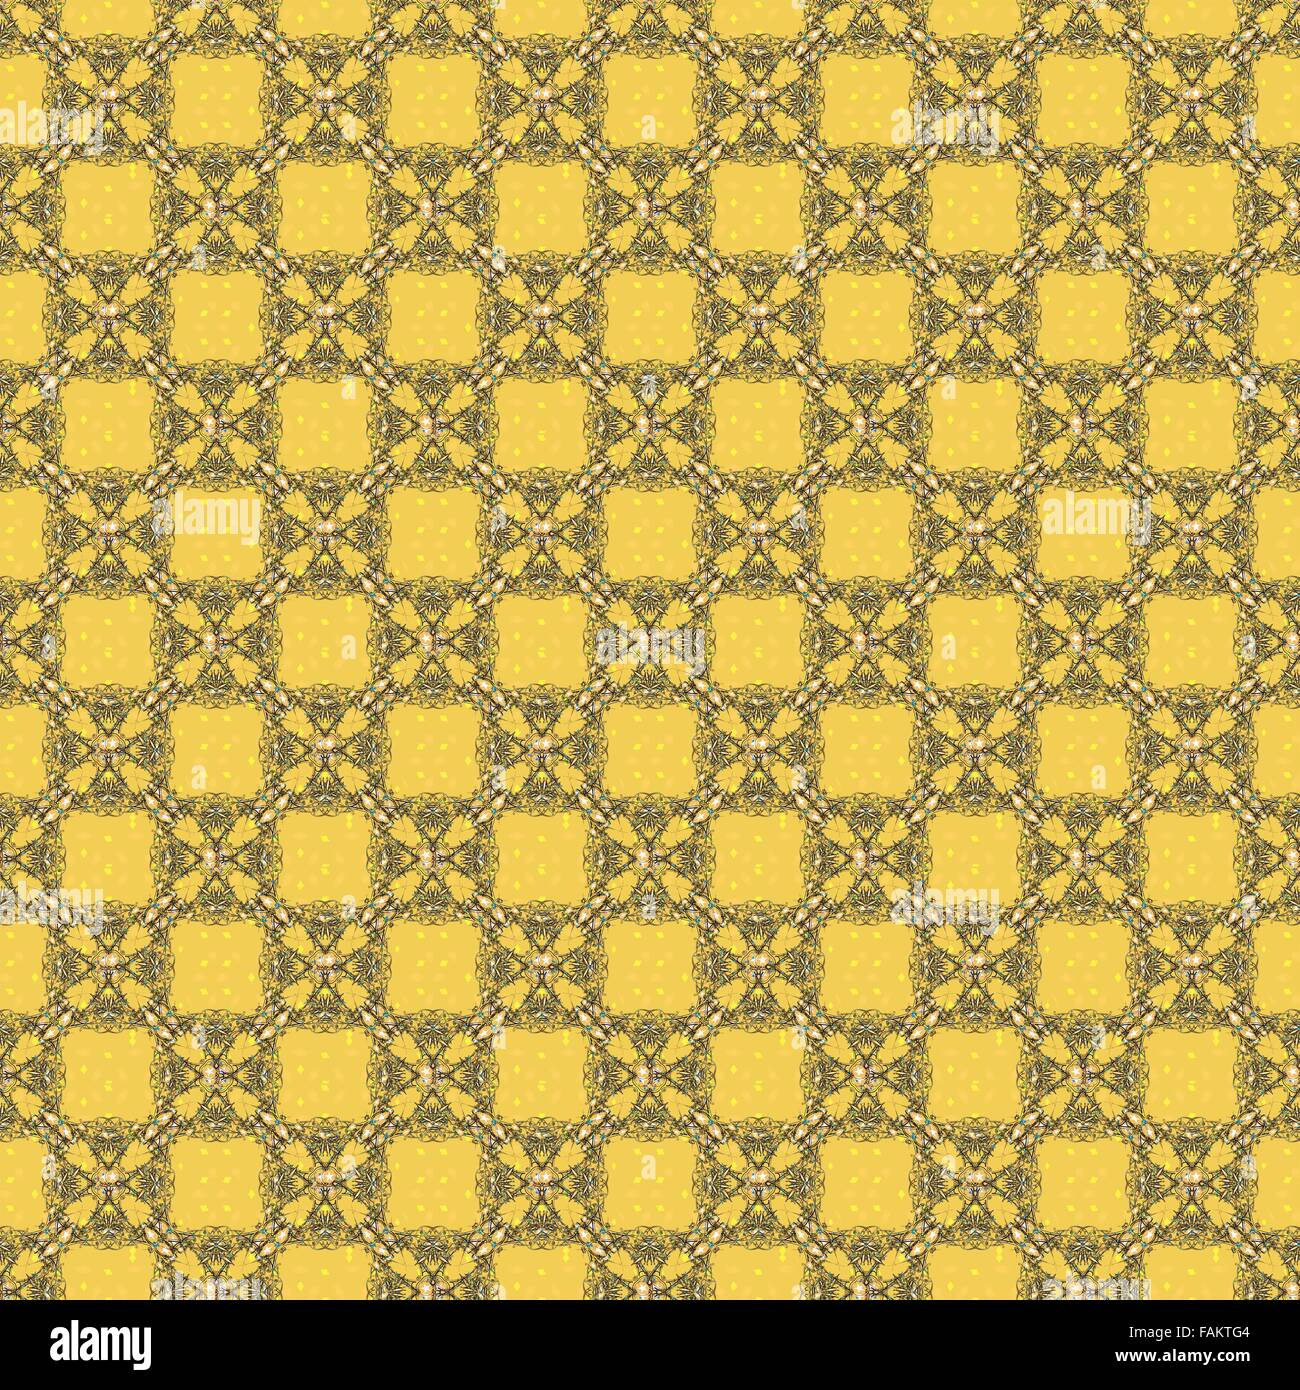 Allover tile design with chroma shabby background. Stock Photo